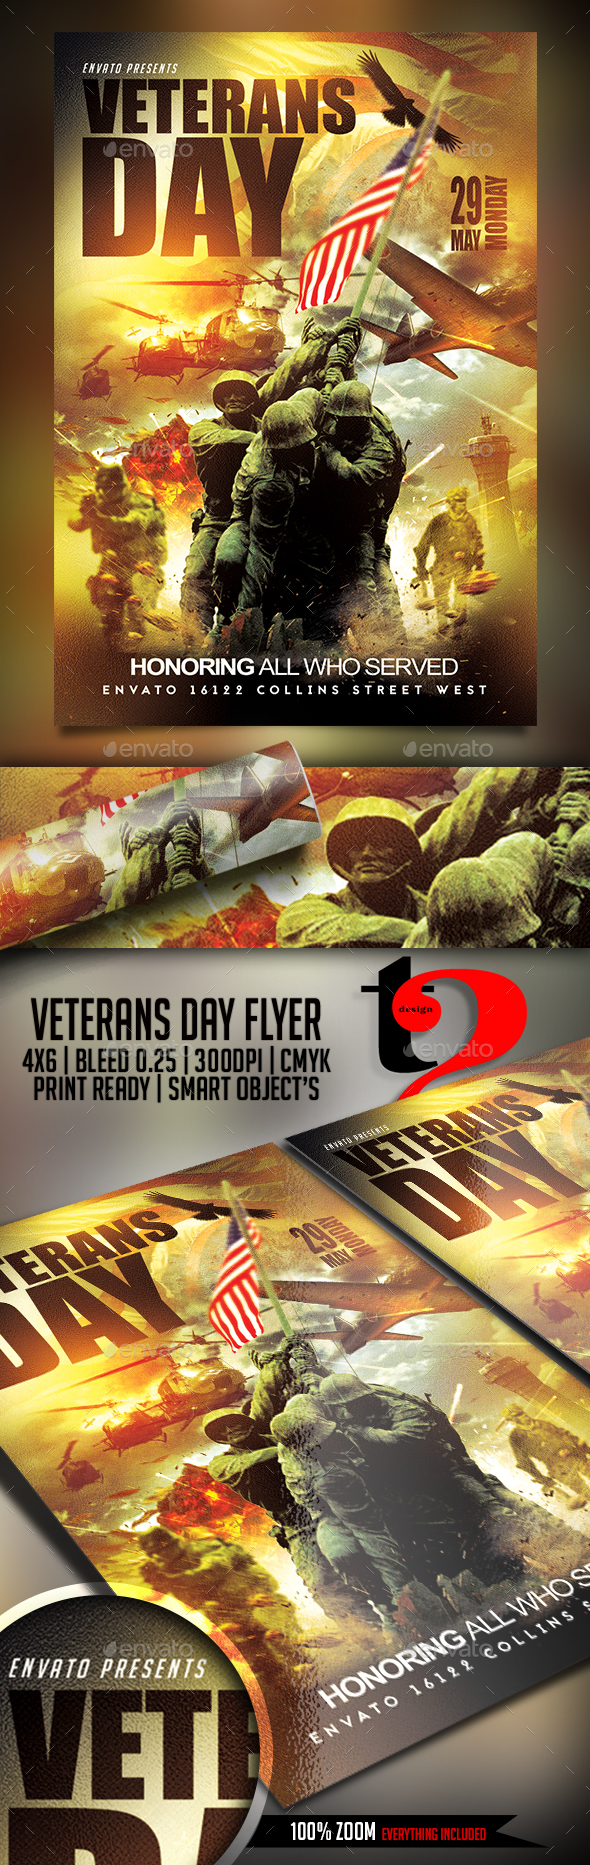 Veterans Day Flyer Template